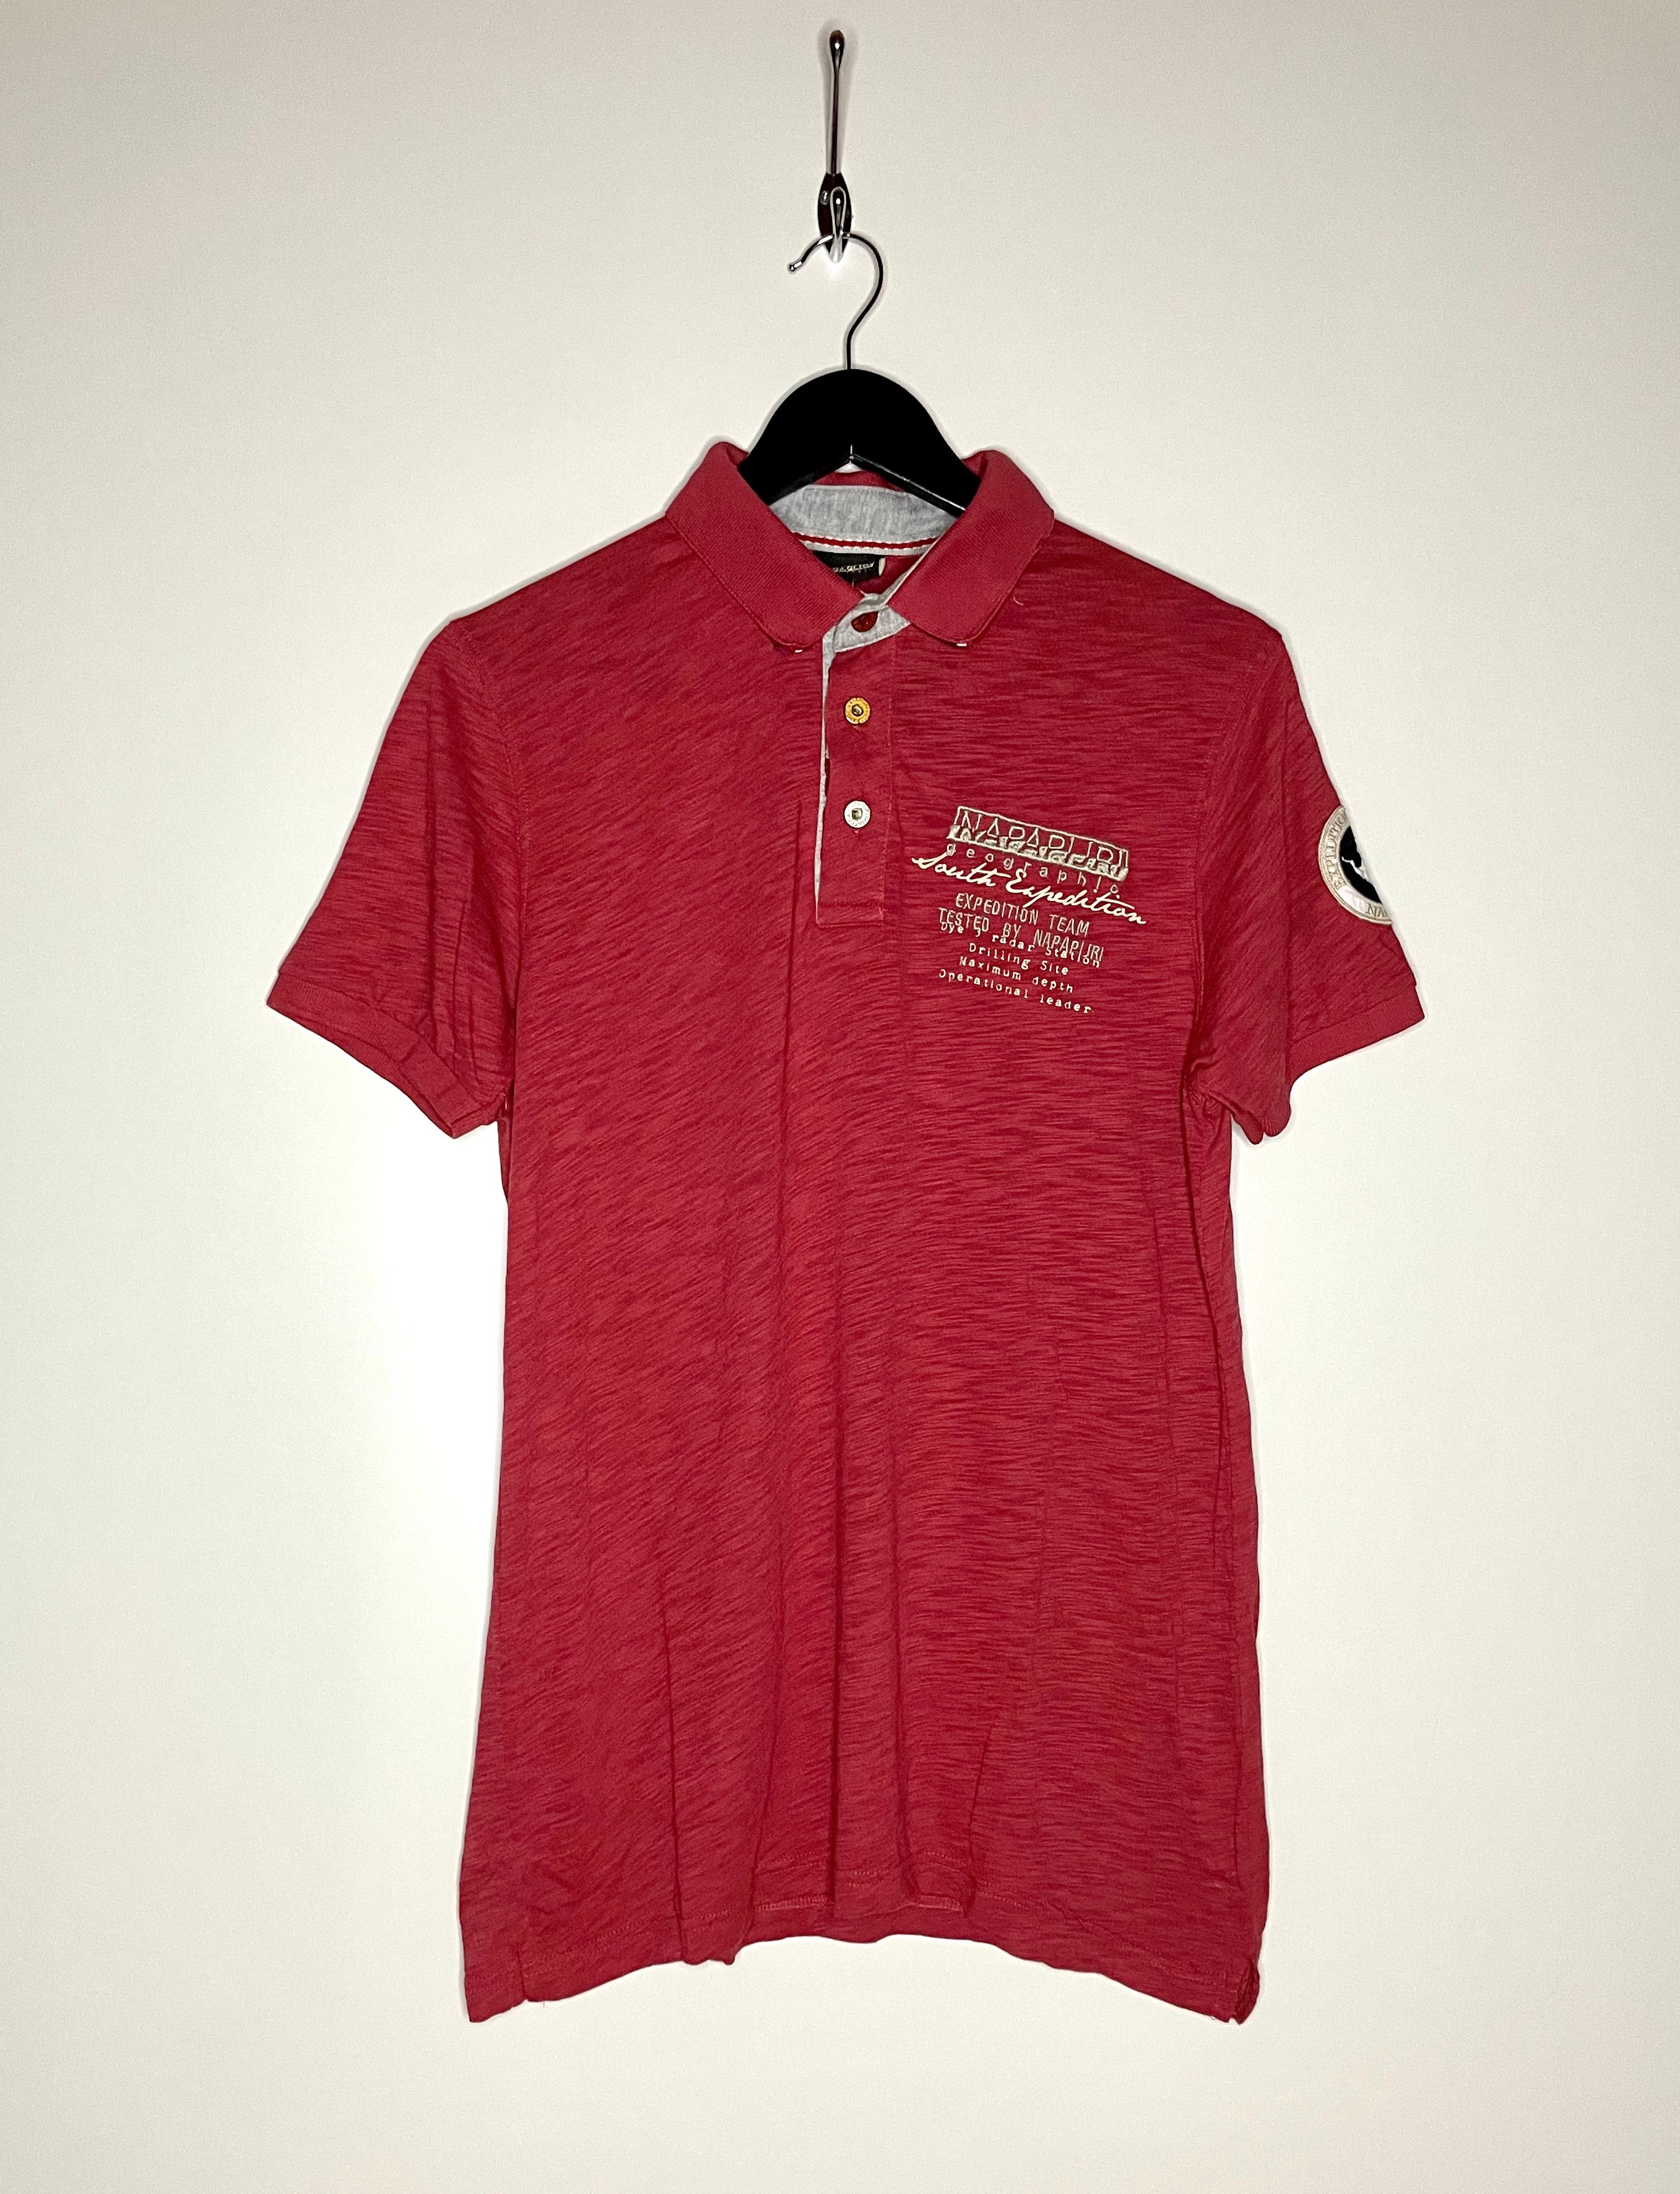 Napapijri Vintage Polo Shirt Red Size L 